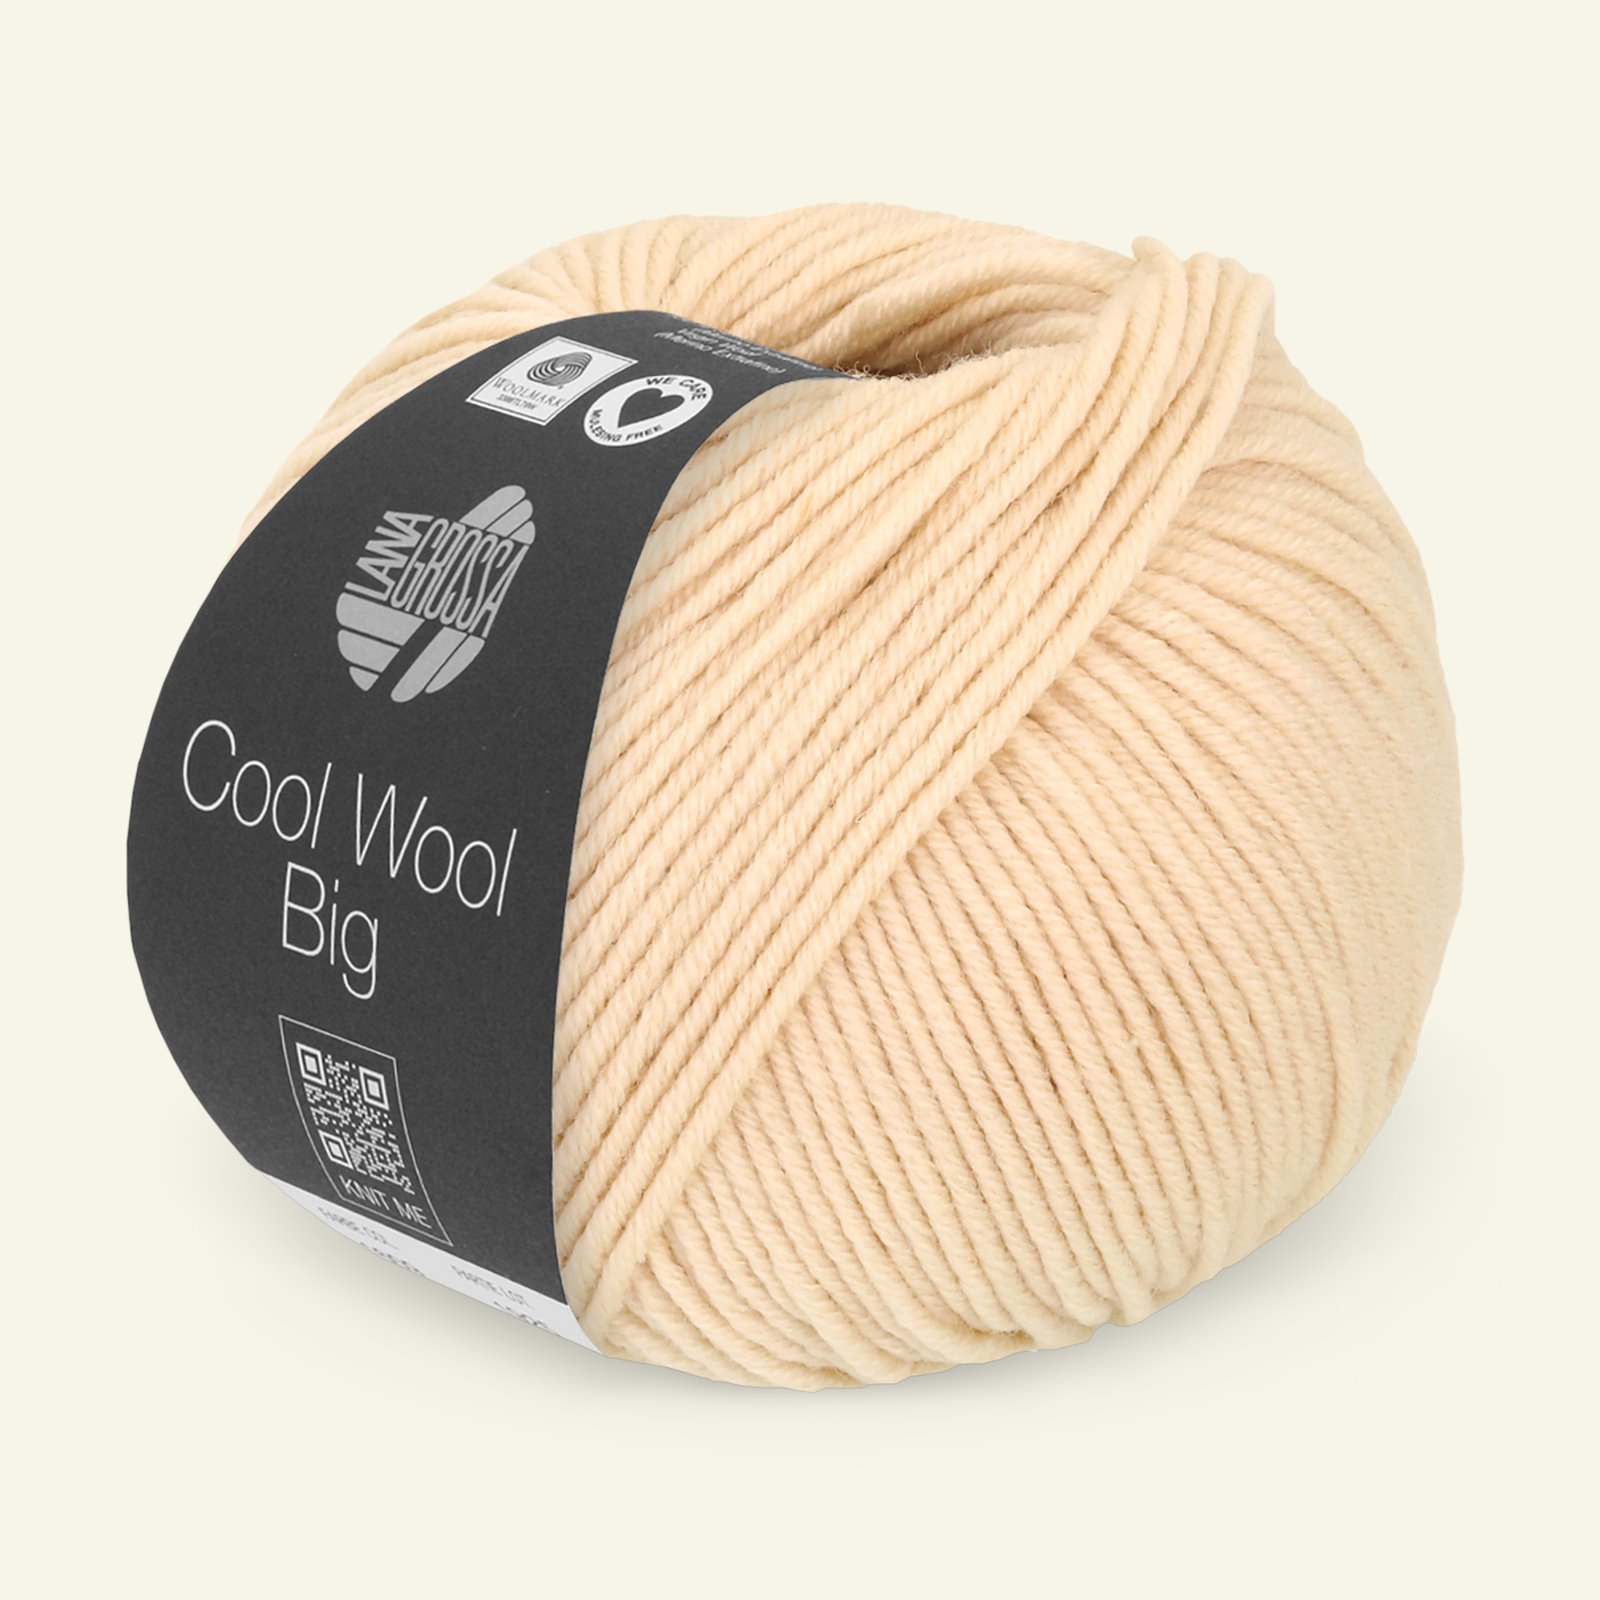 Lana Grossa, extrafine merino wool yarn "Cool Wool Big", sand 90001100_pack